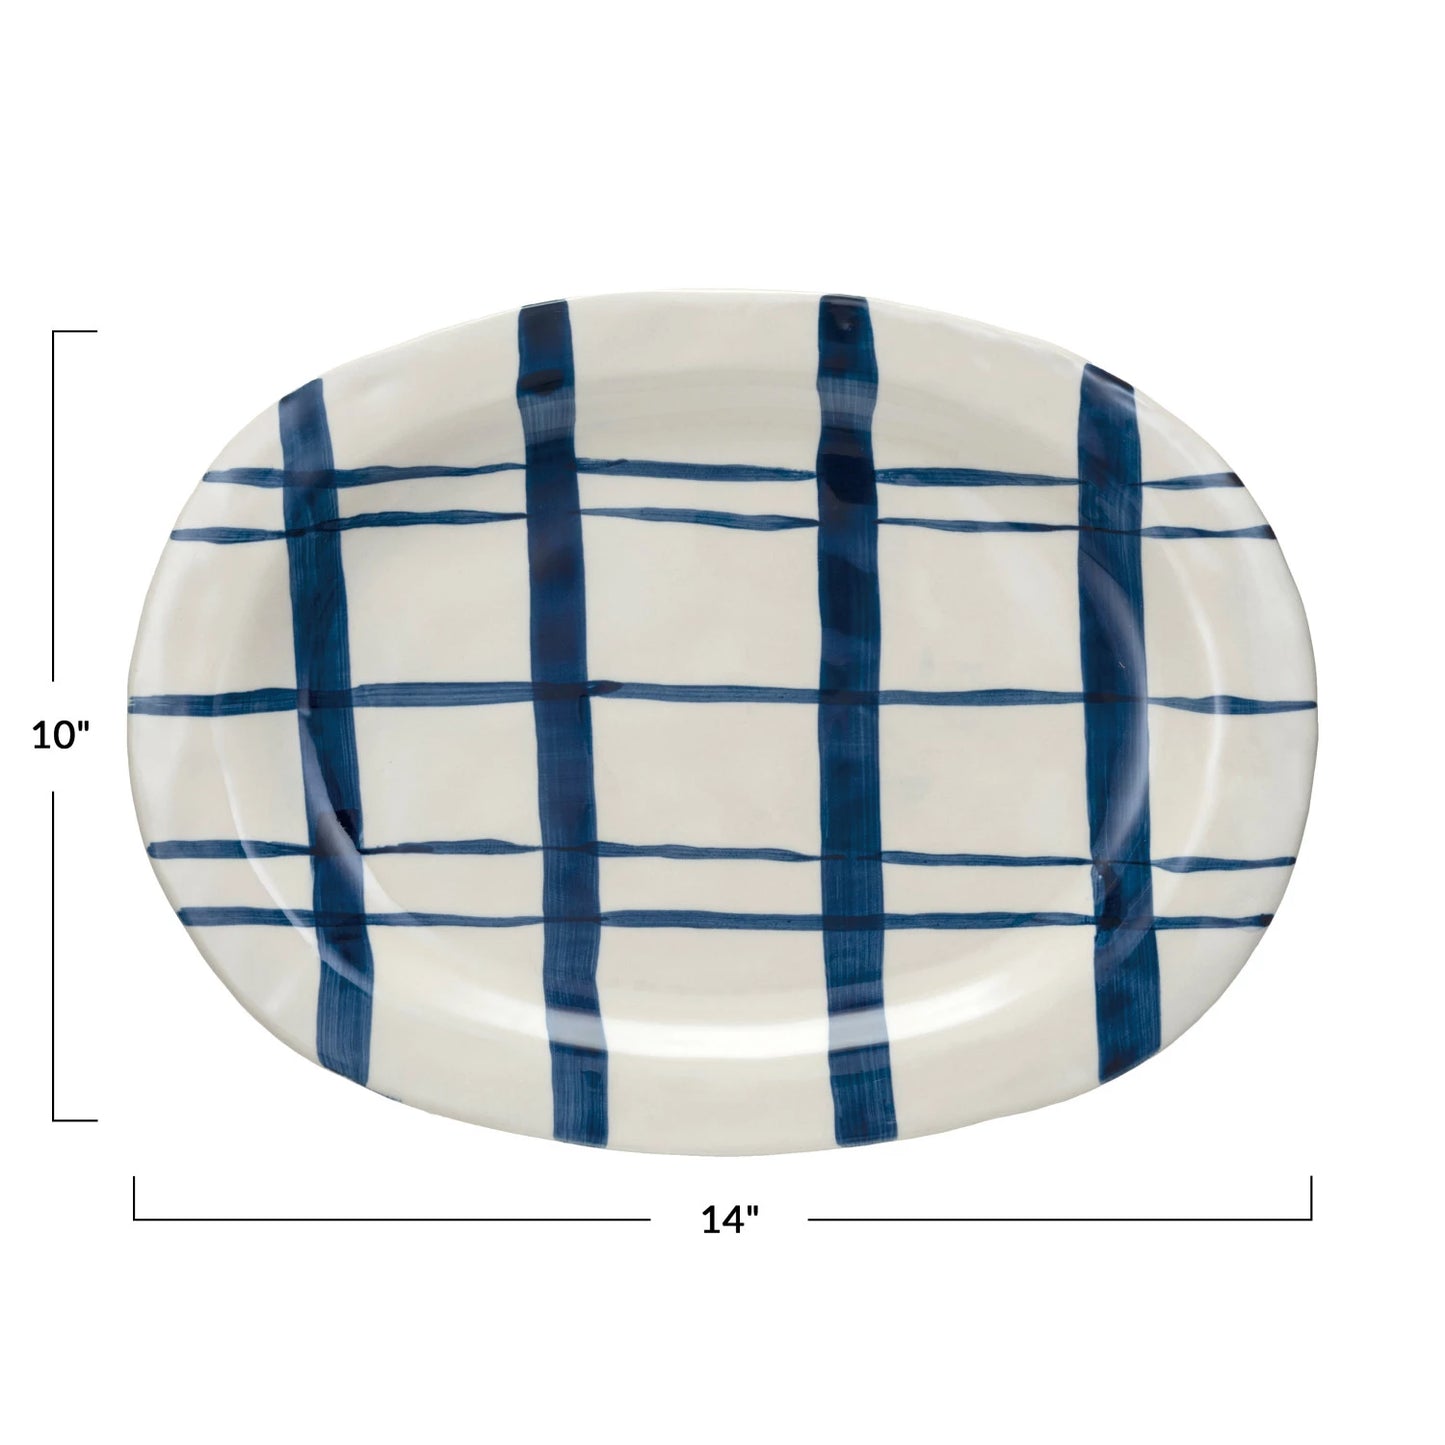 grid stoneware platter in blue